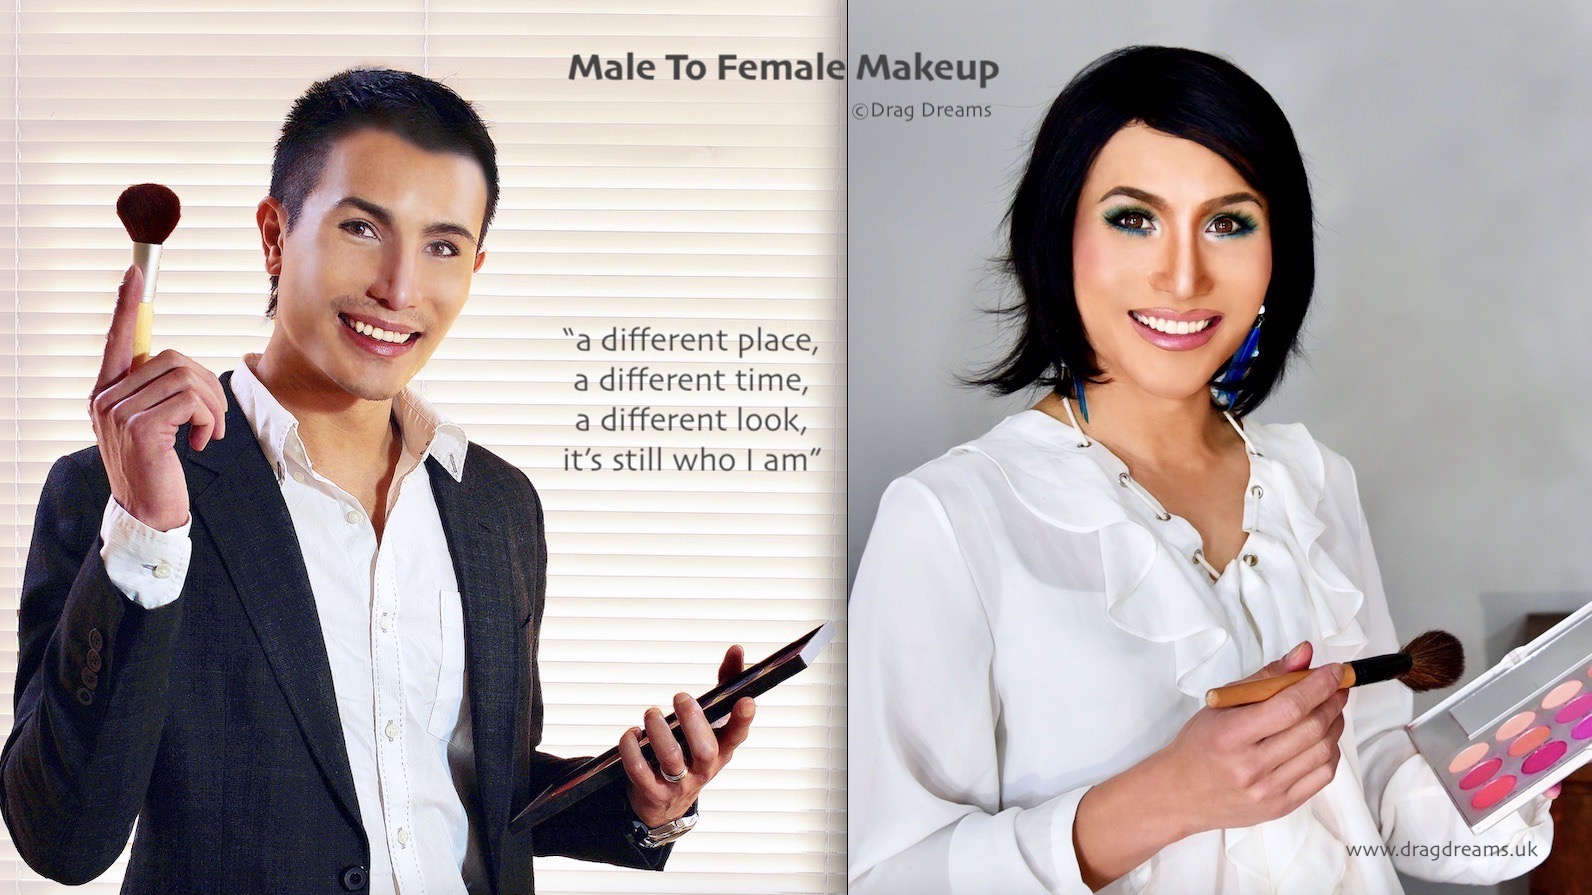 carol decicco recommends Male To Female Makeover